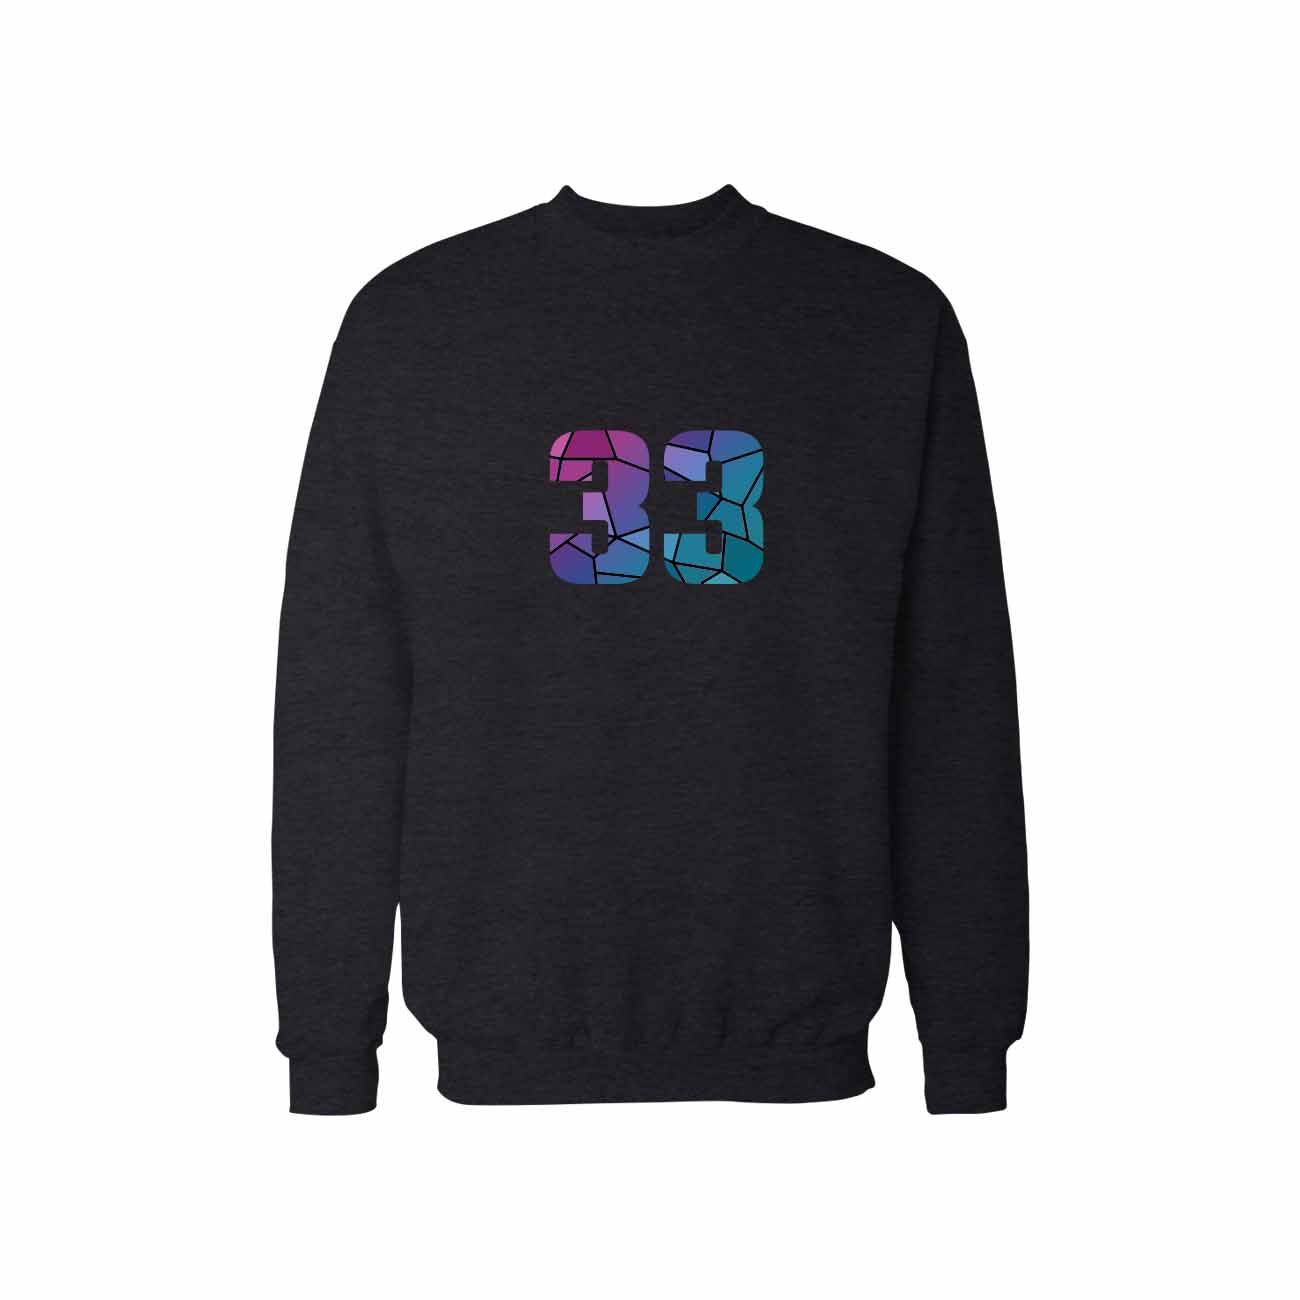 33 Number Unisex  Sweatshirt